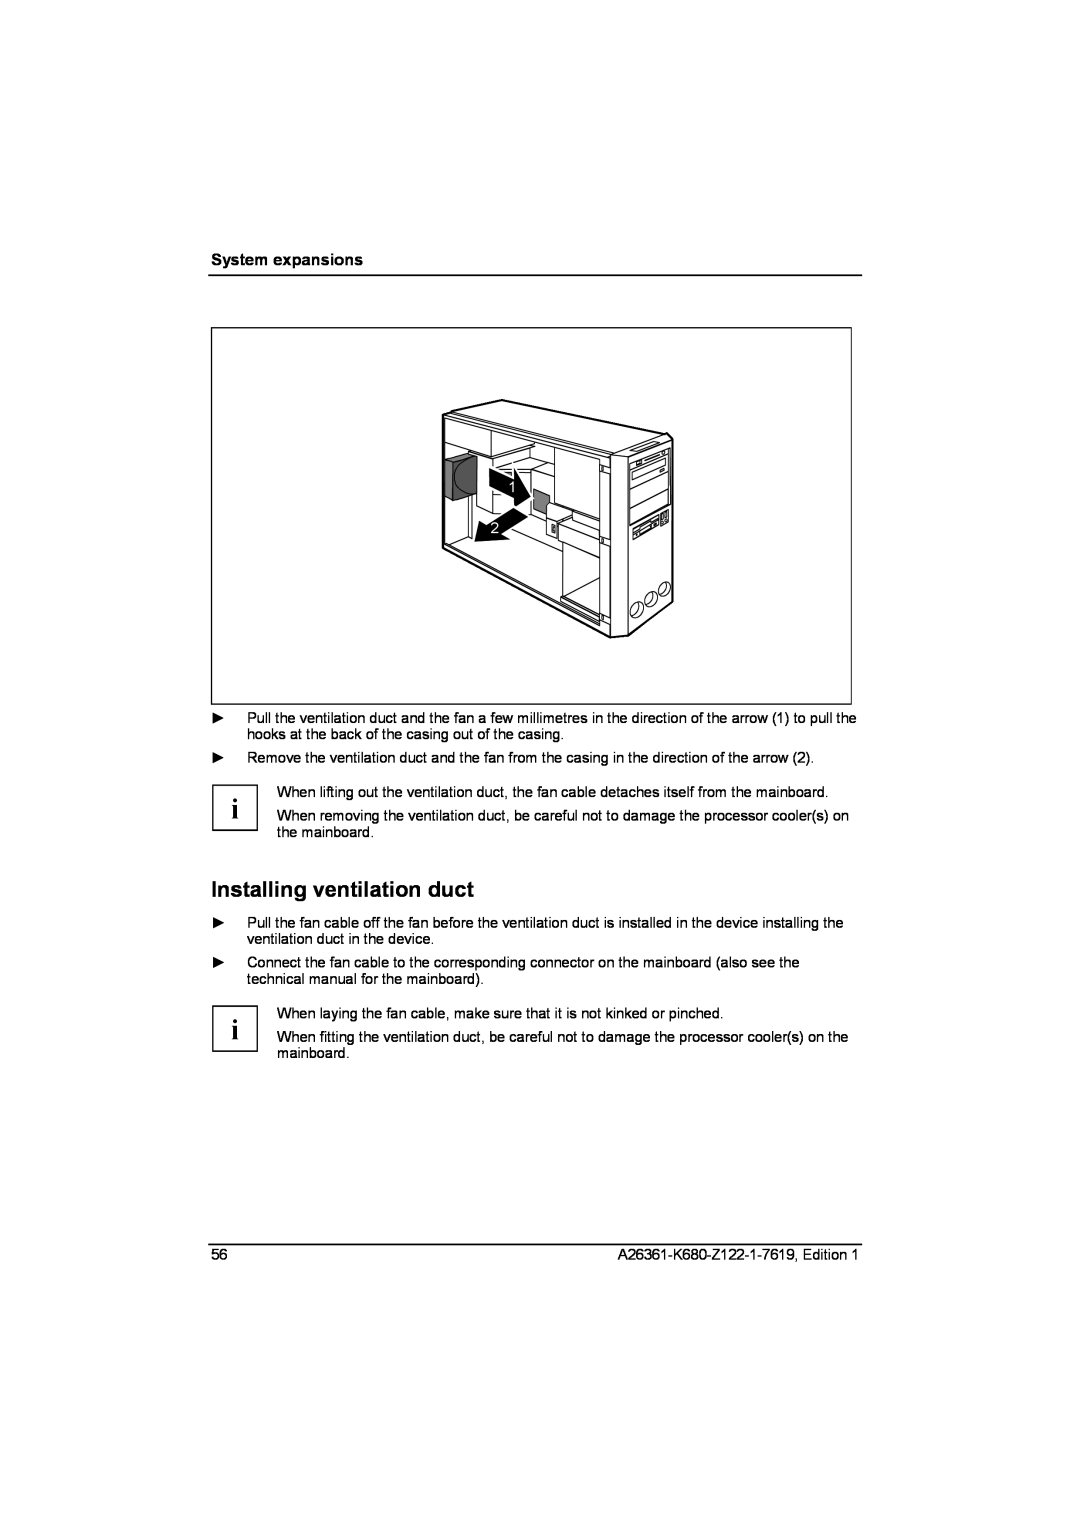 Fujitsu V810, R630 manual Installing ventilation duct, System expansions 